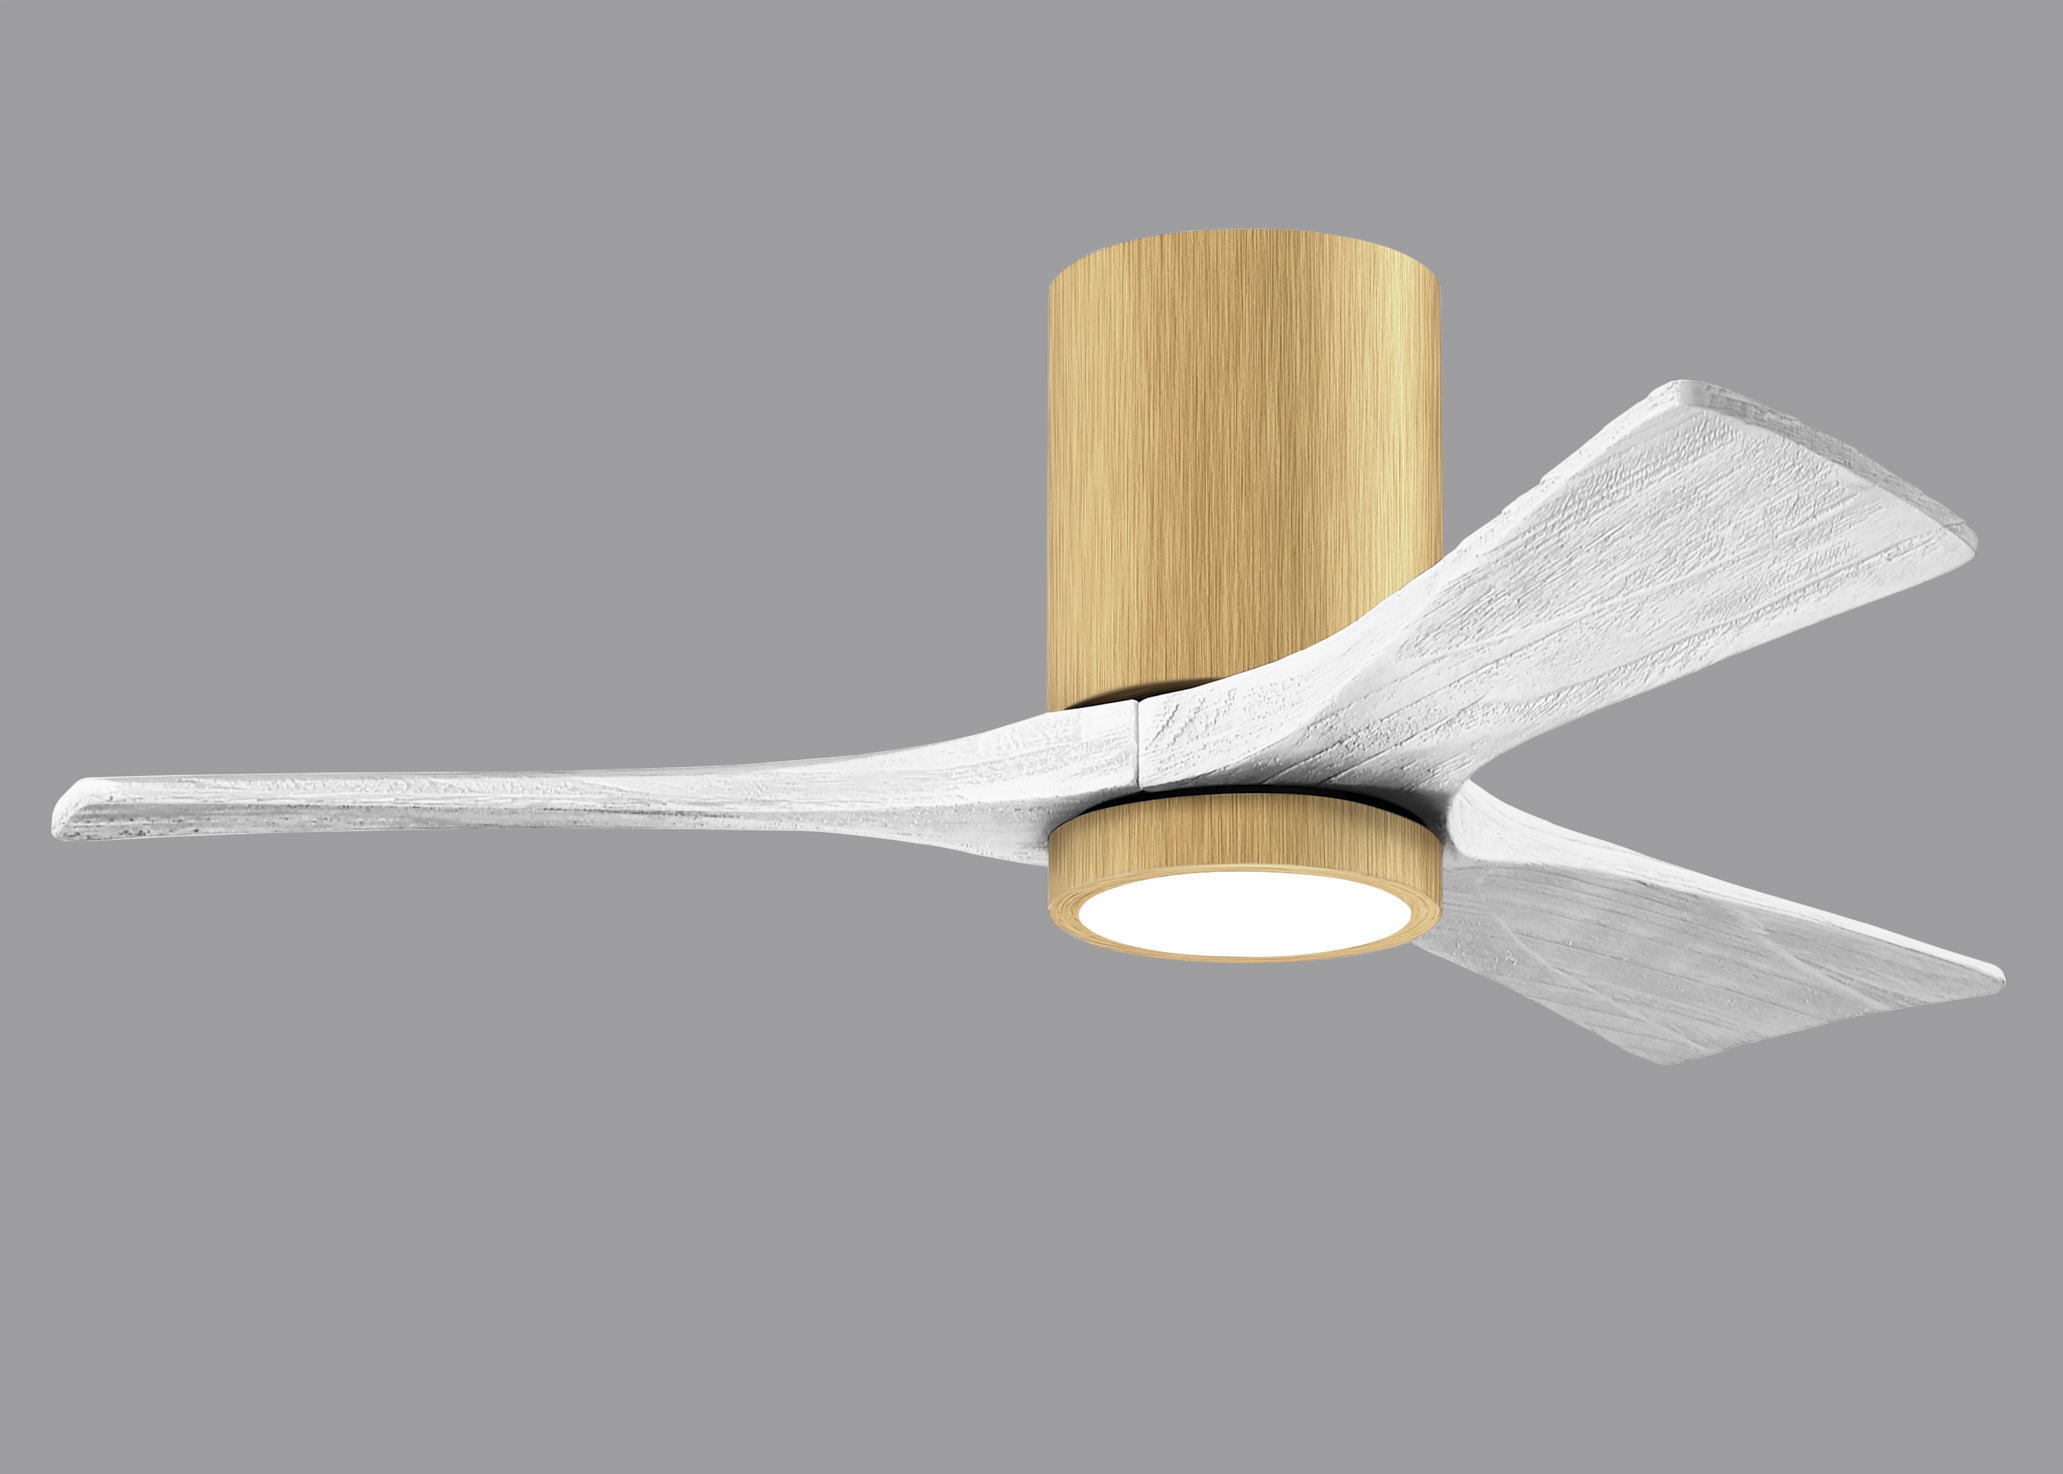 Irene-3HLK 6-speed ceiling fan in light maple finish with 42